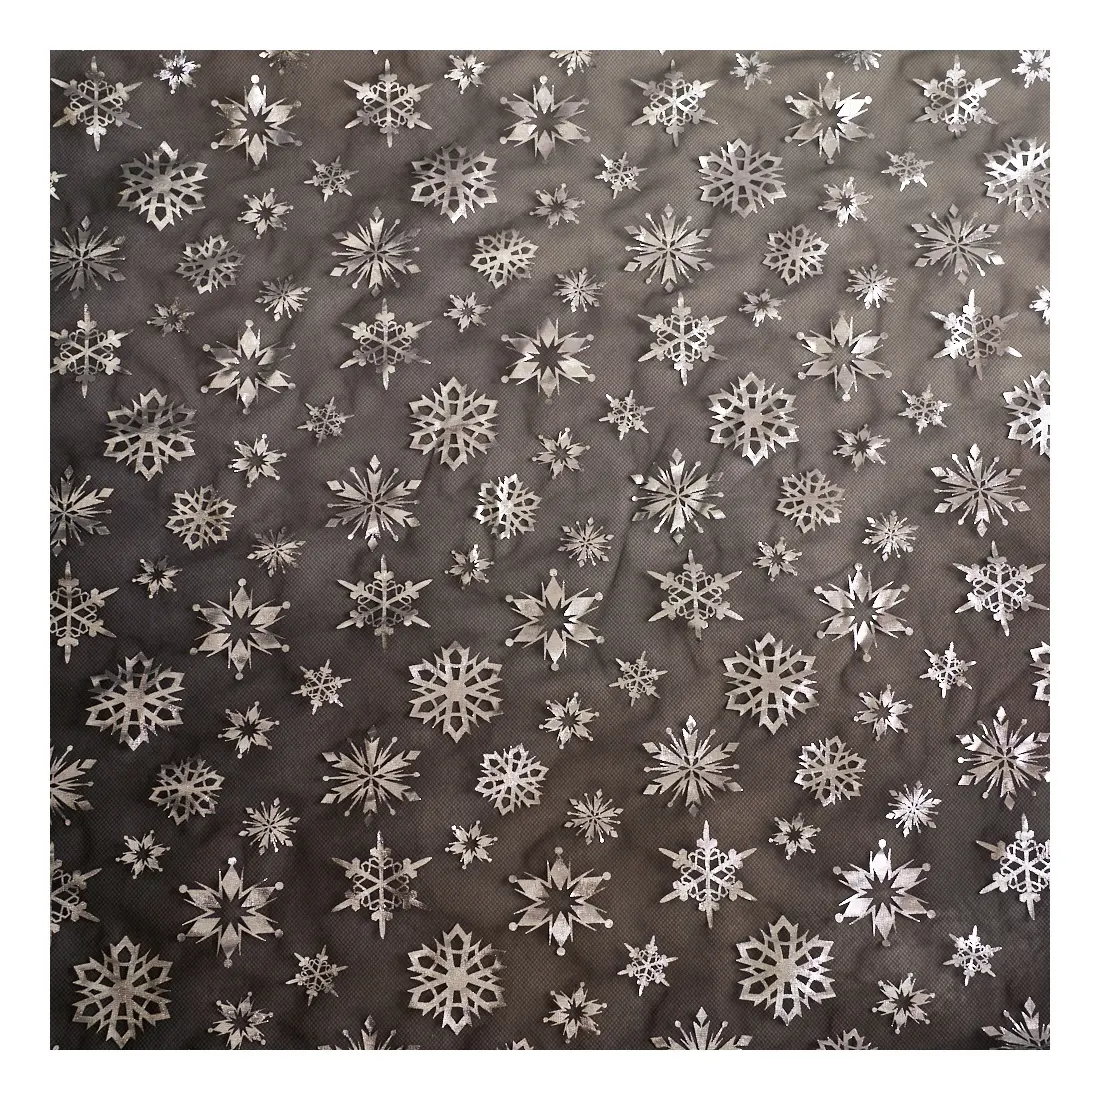 Wholesale Glitter Foil Print Snowflake Fabric Christmas Glitter Tulle Fabric For Christmas Decoration